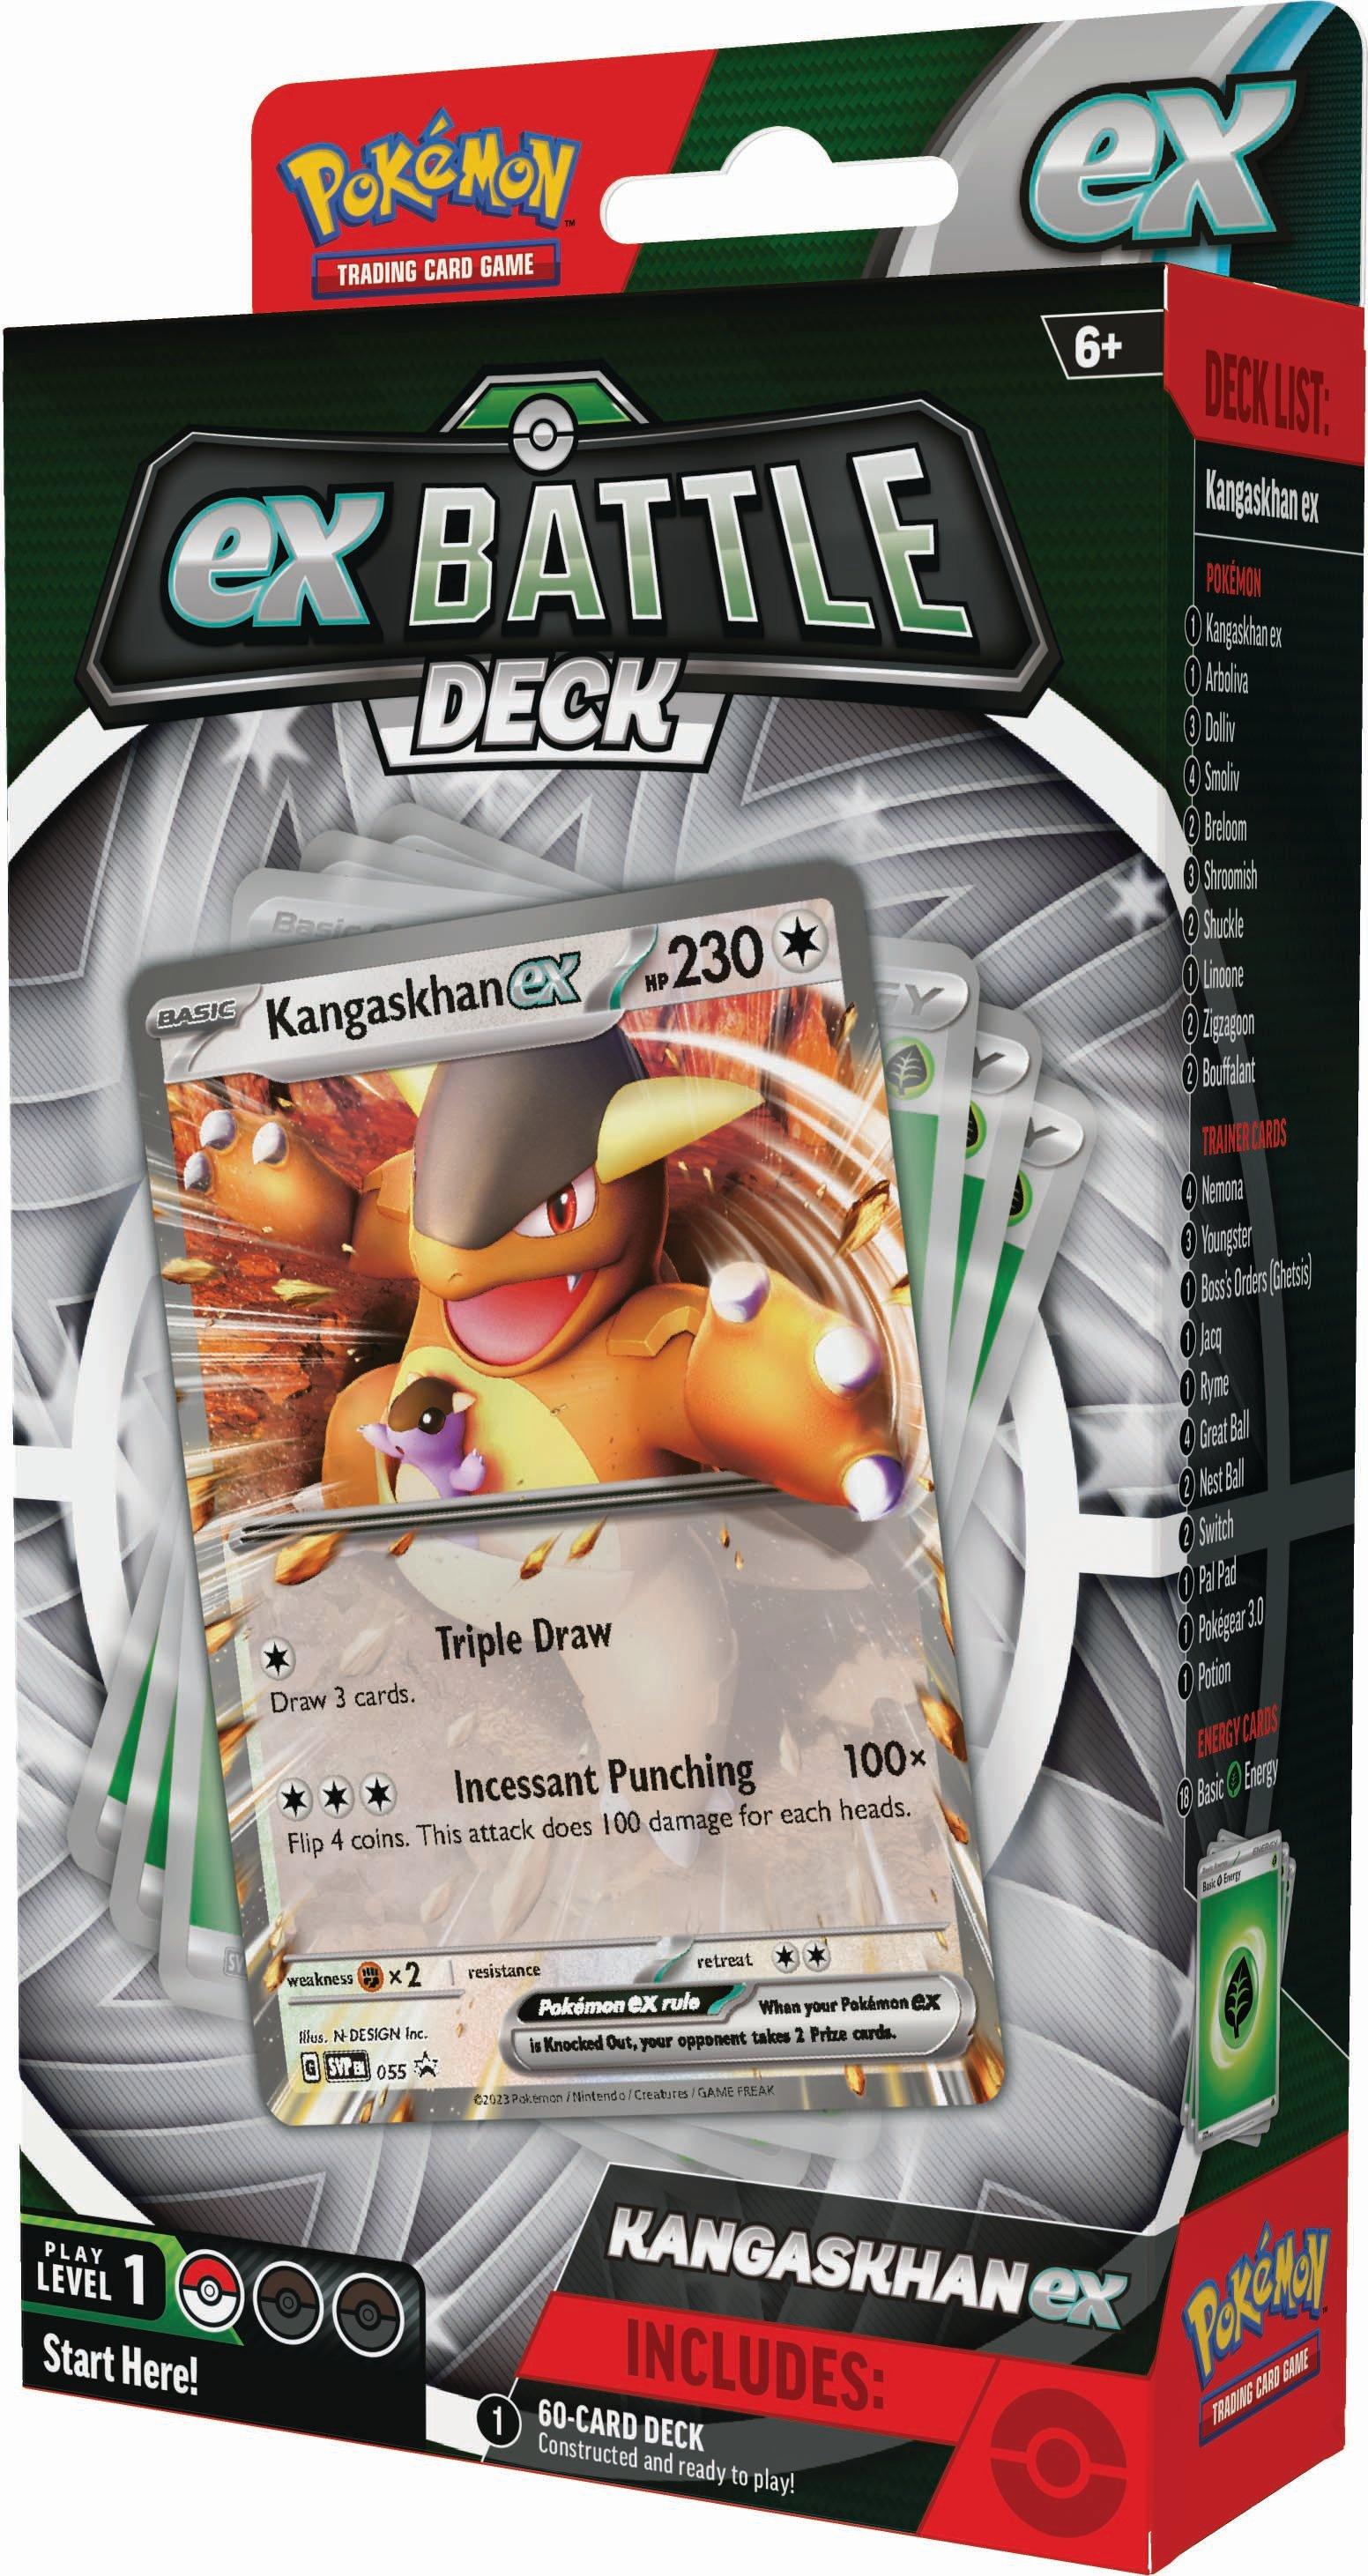 Pokémon TCG: Kangaskhan ex & Greninja ex - ex Battle Decks (Set of 2)